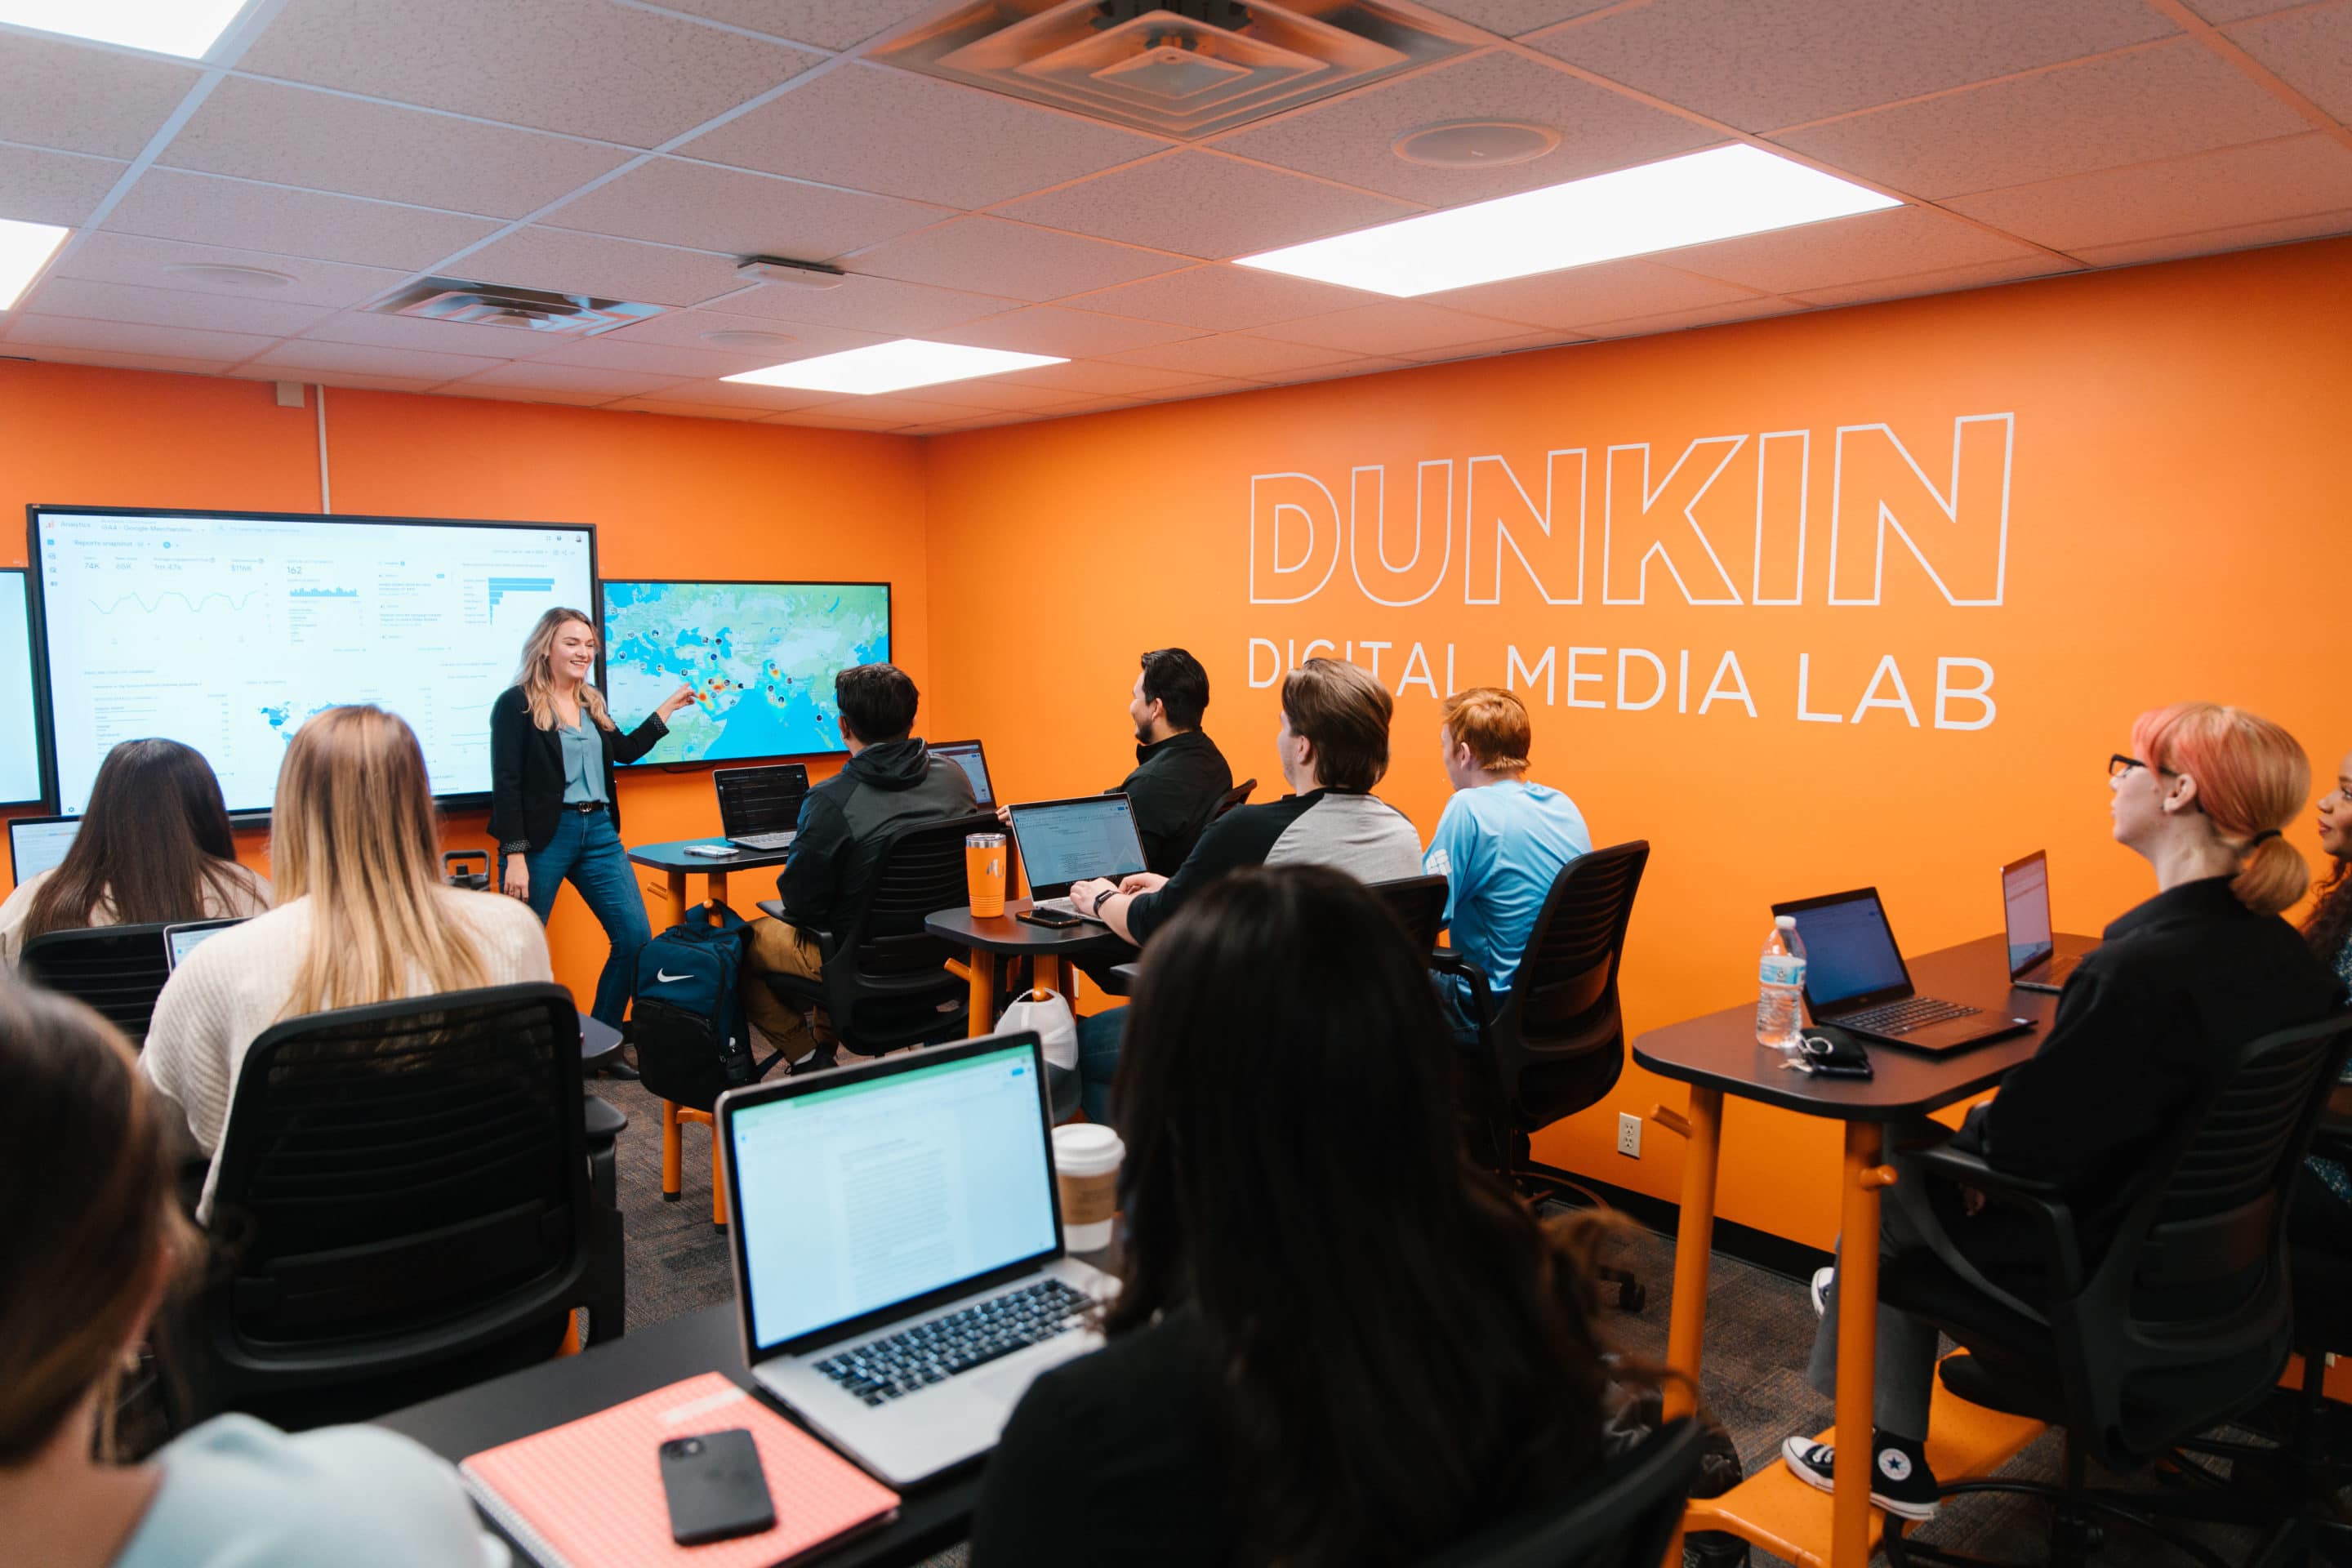 Victoria Shaw teaching in the Dunkin Digital Media Lab